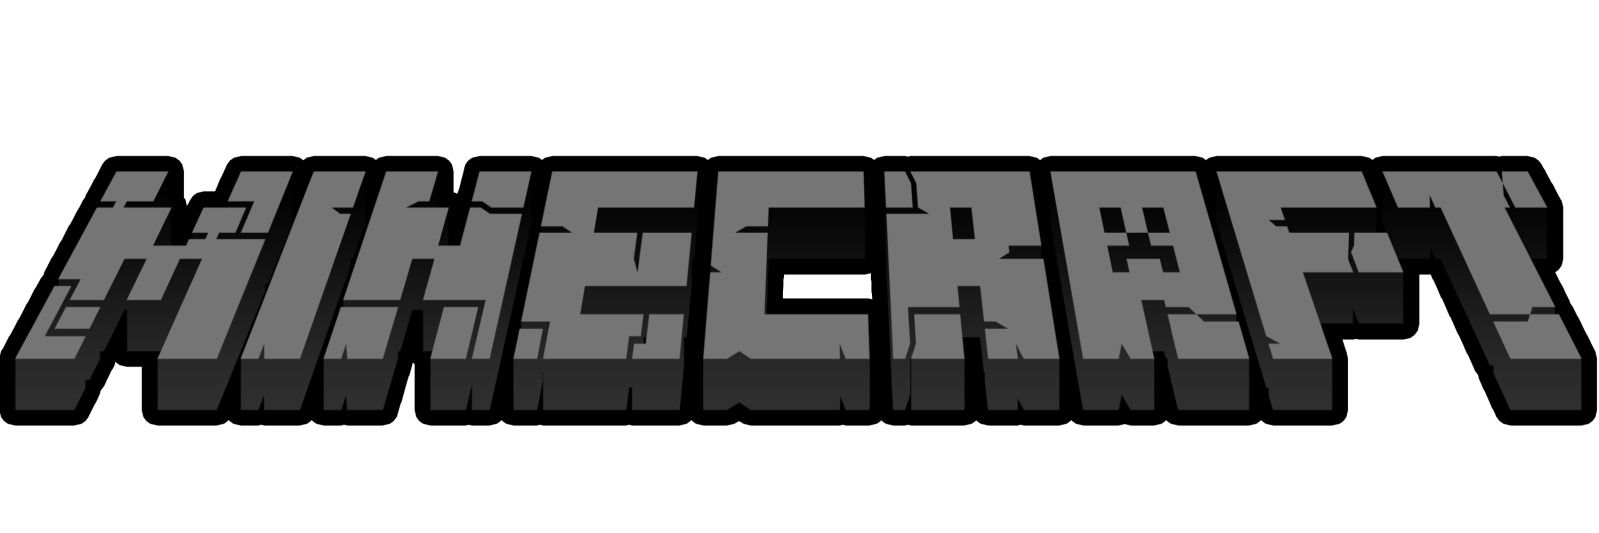 minecraft cool logos